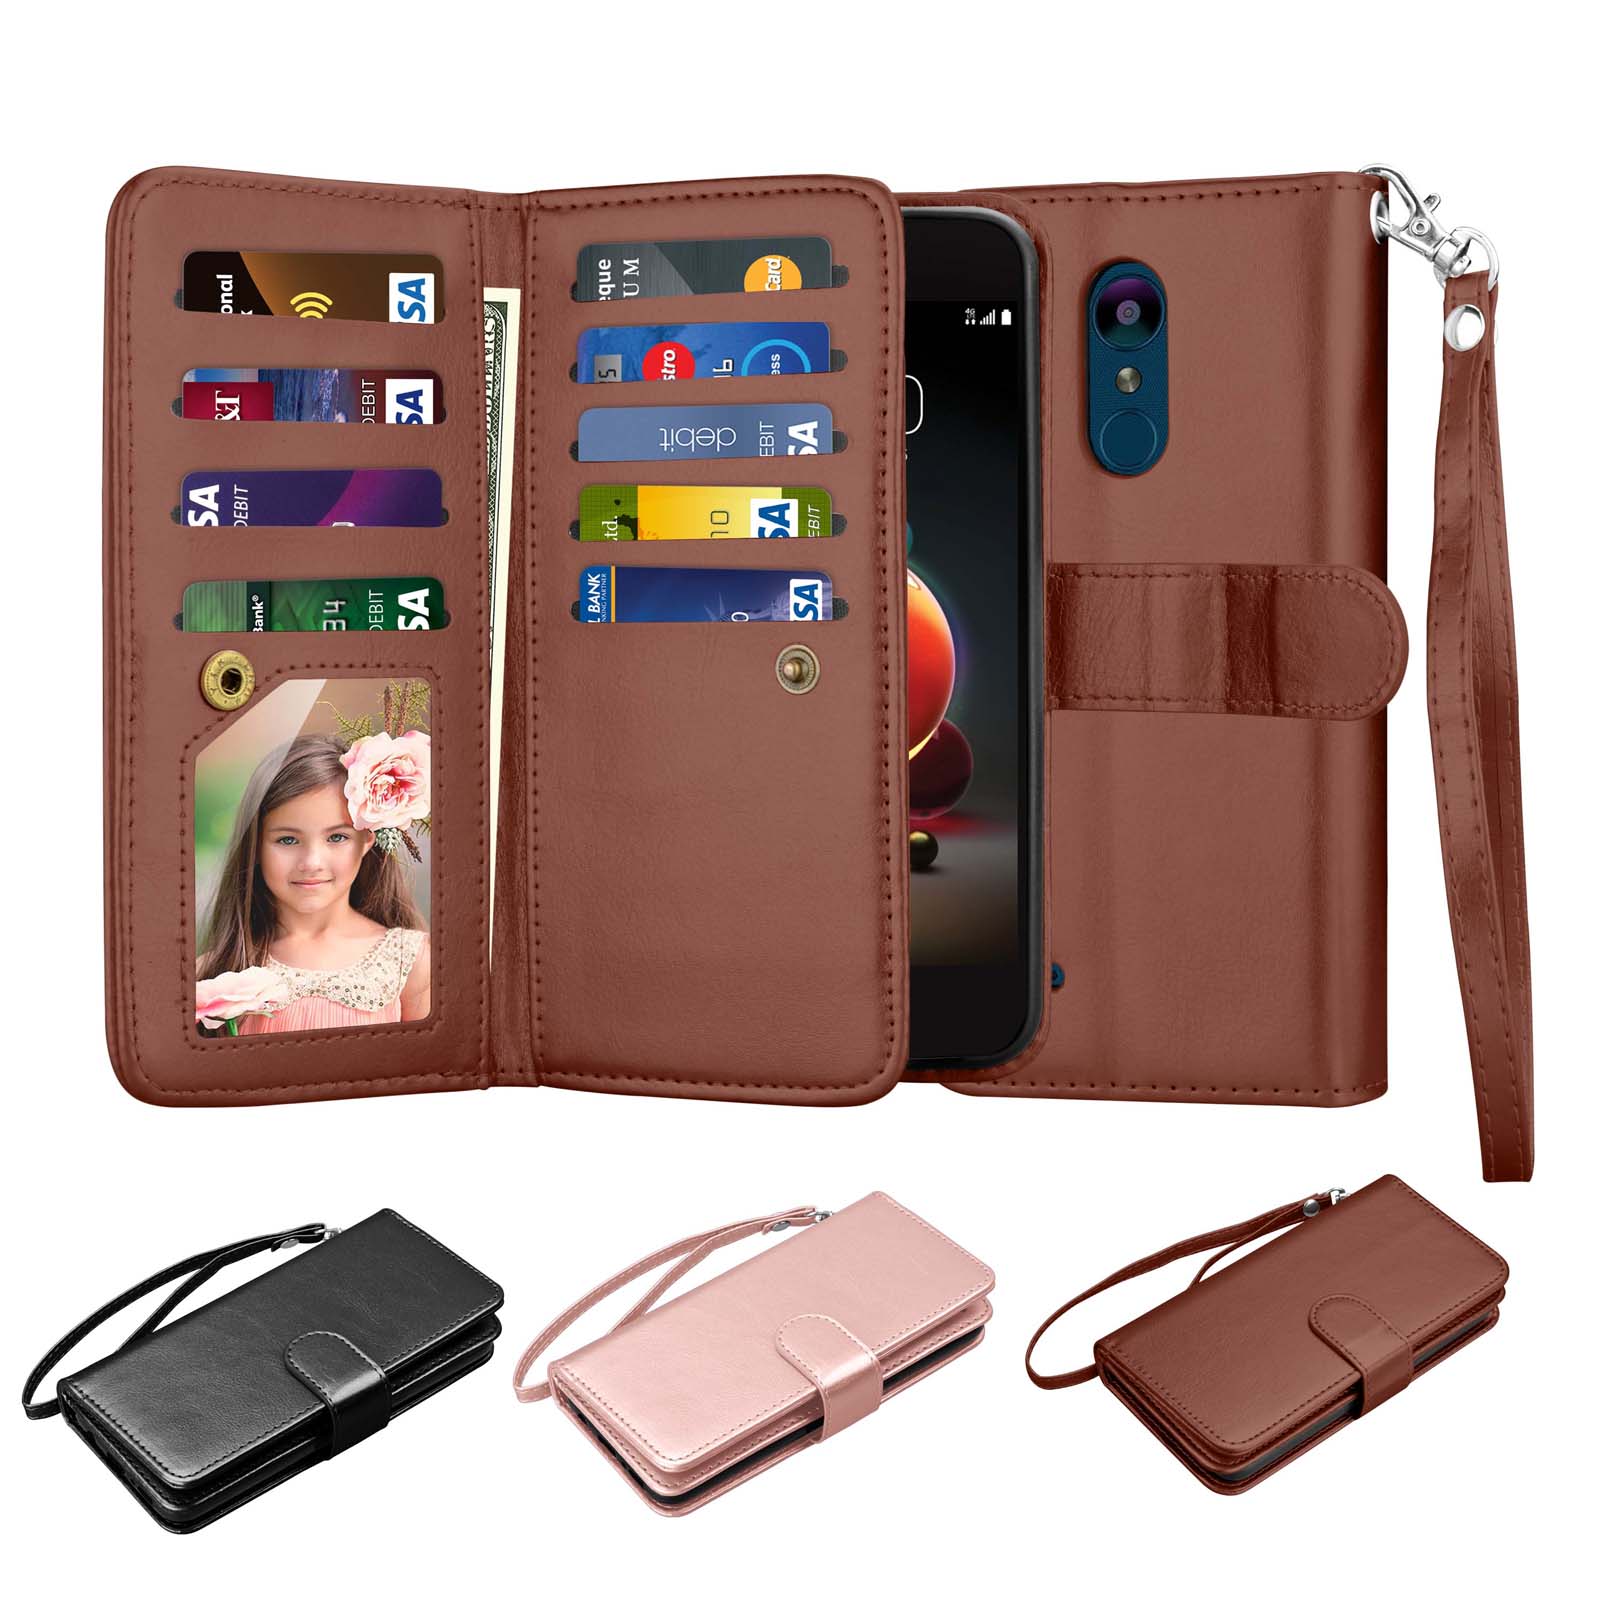 LG Rebel 3 4 LTE Case, Wallet Case LG Tribute Dynasty 5.0", LG LV3 K8 2018 PU Leather Case, Njjex PU Leather Magnet Stand Wallet Credit Card Holder Flip Case 9 Card Slots Case Cover -Mint - image 1 of 5